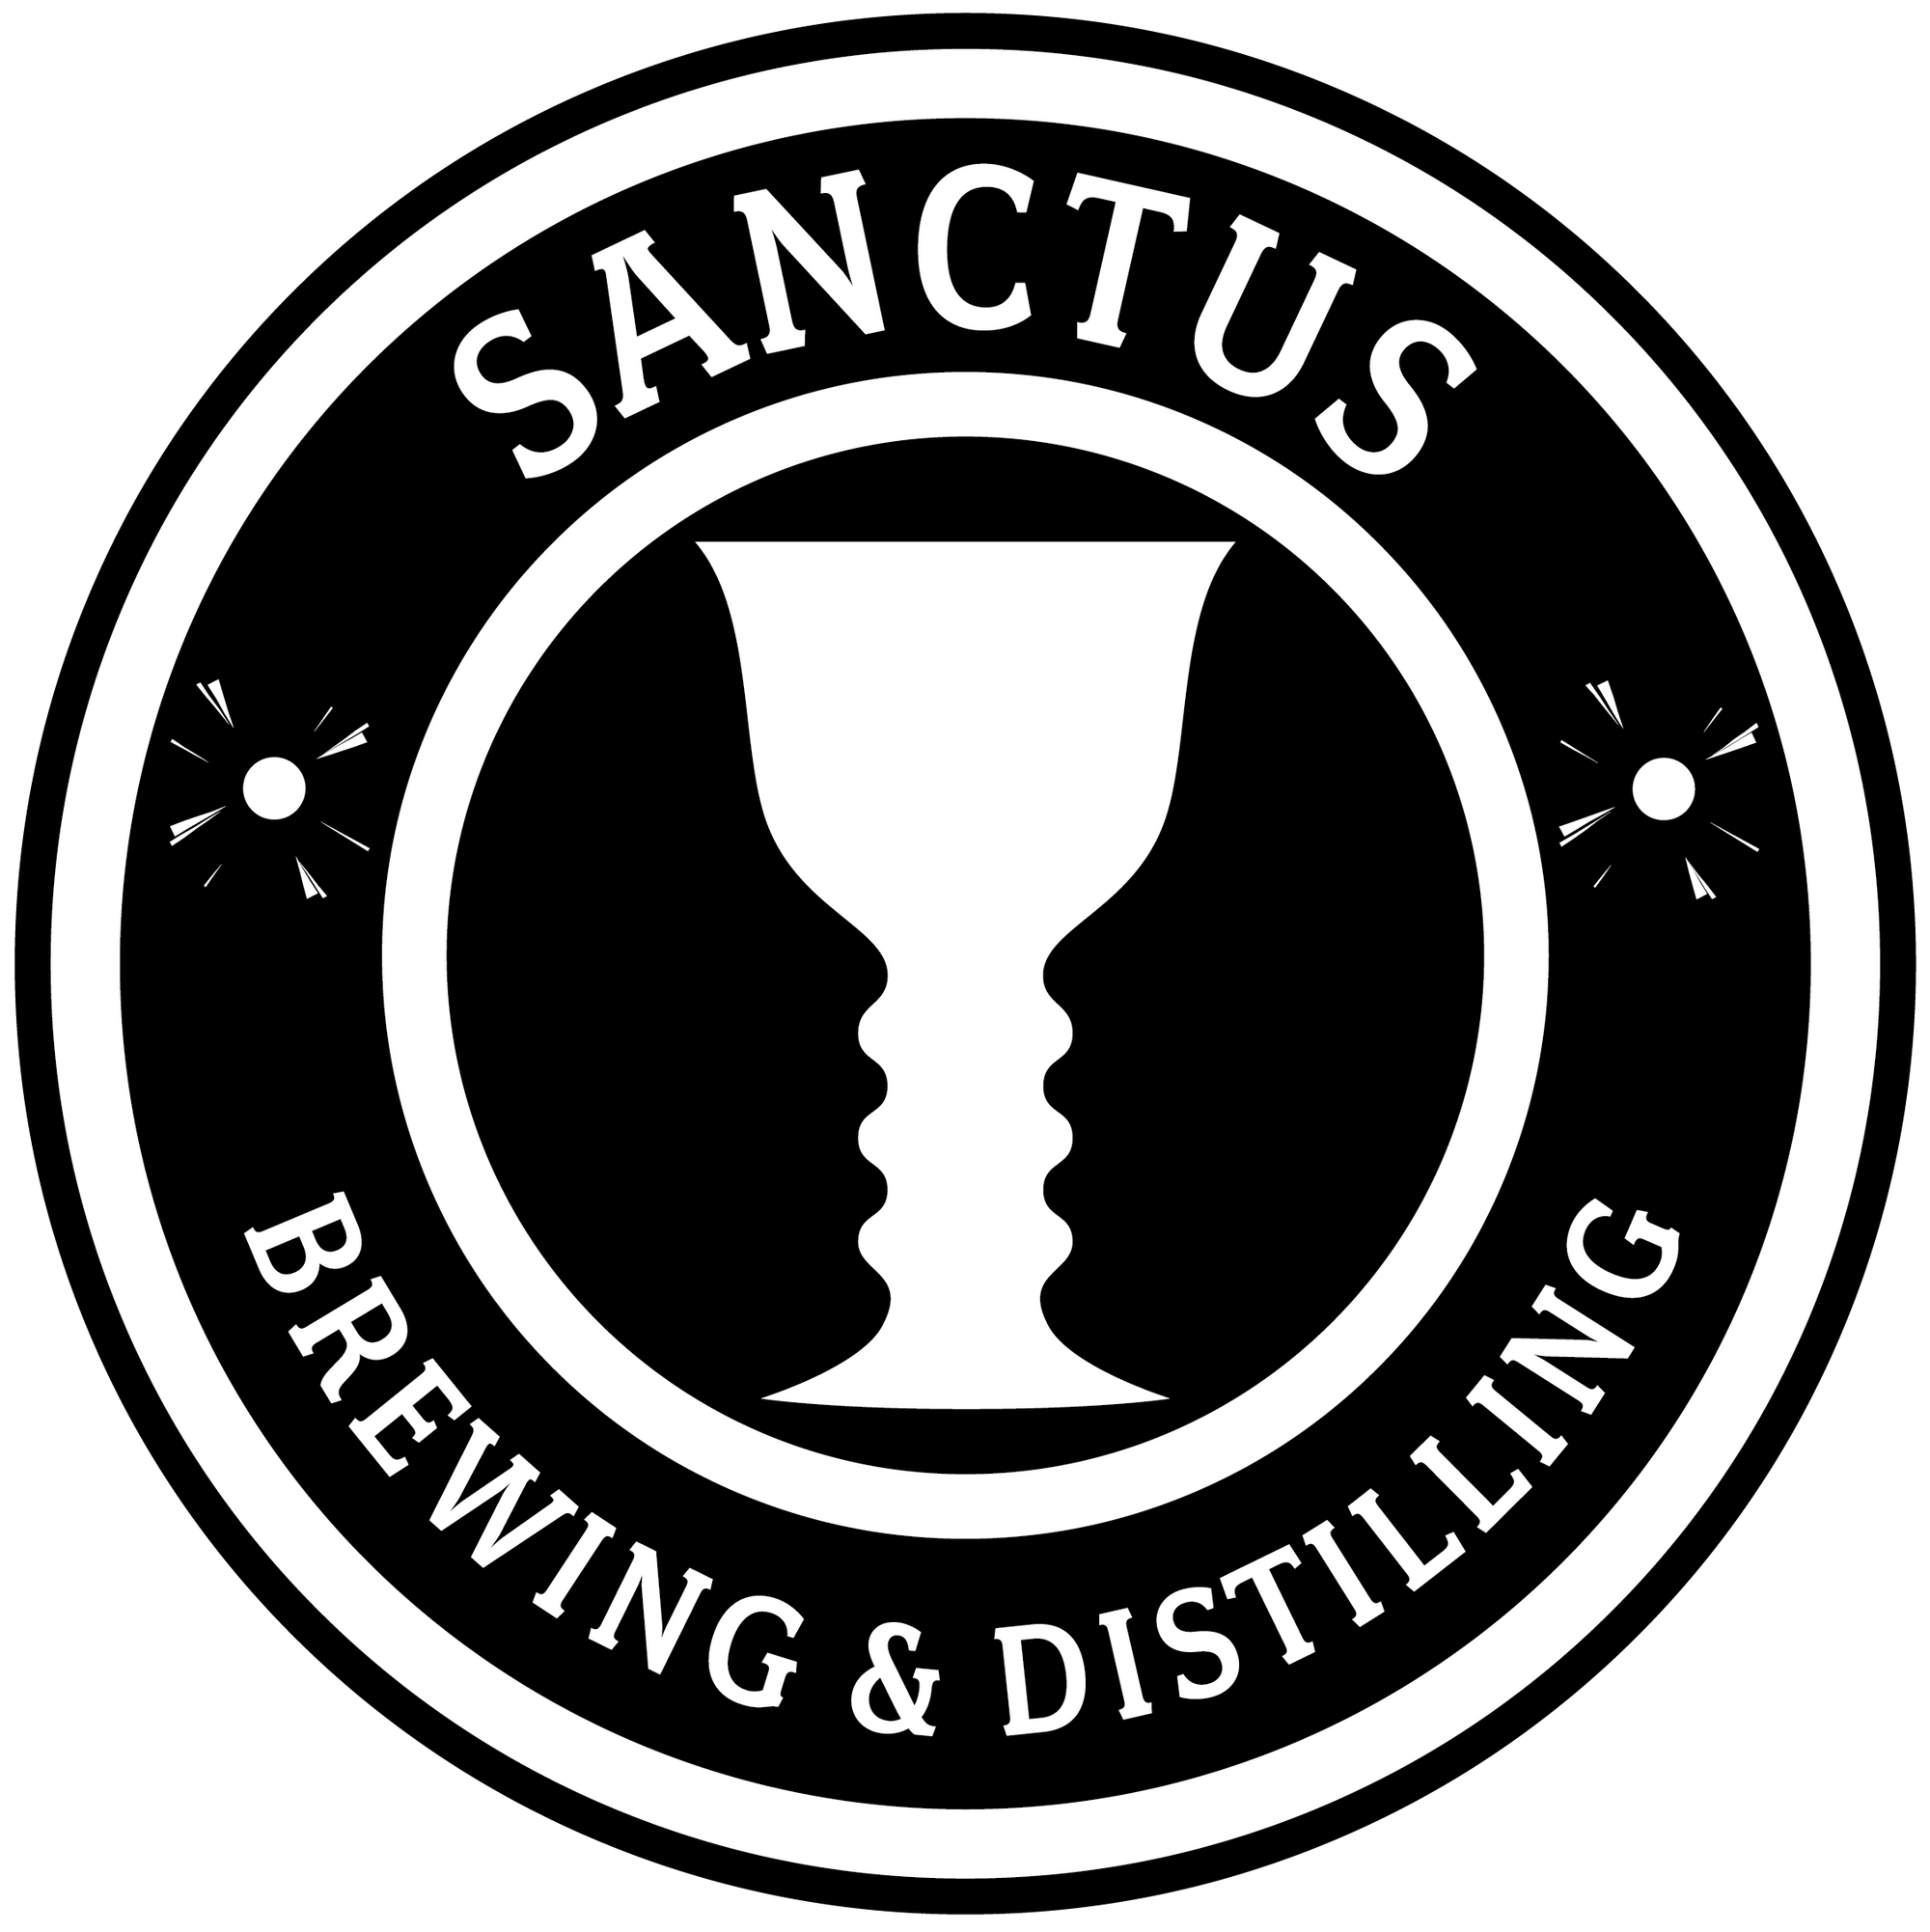 Sanctus Brewing Co